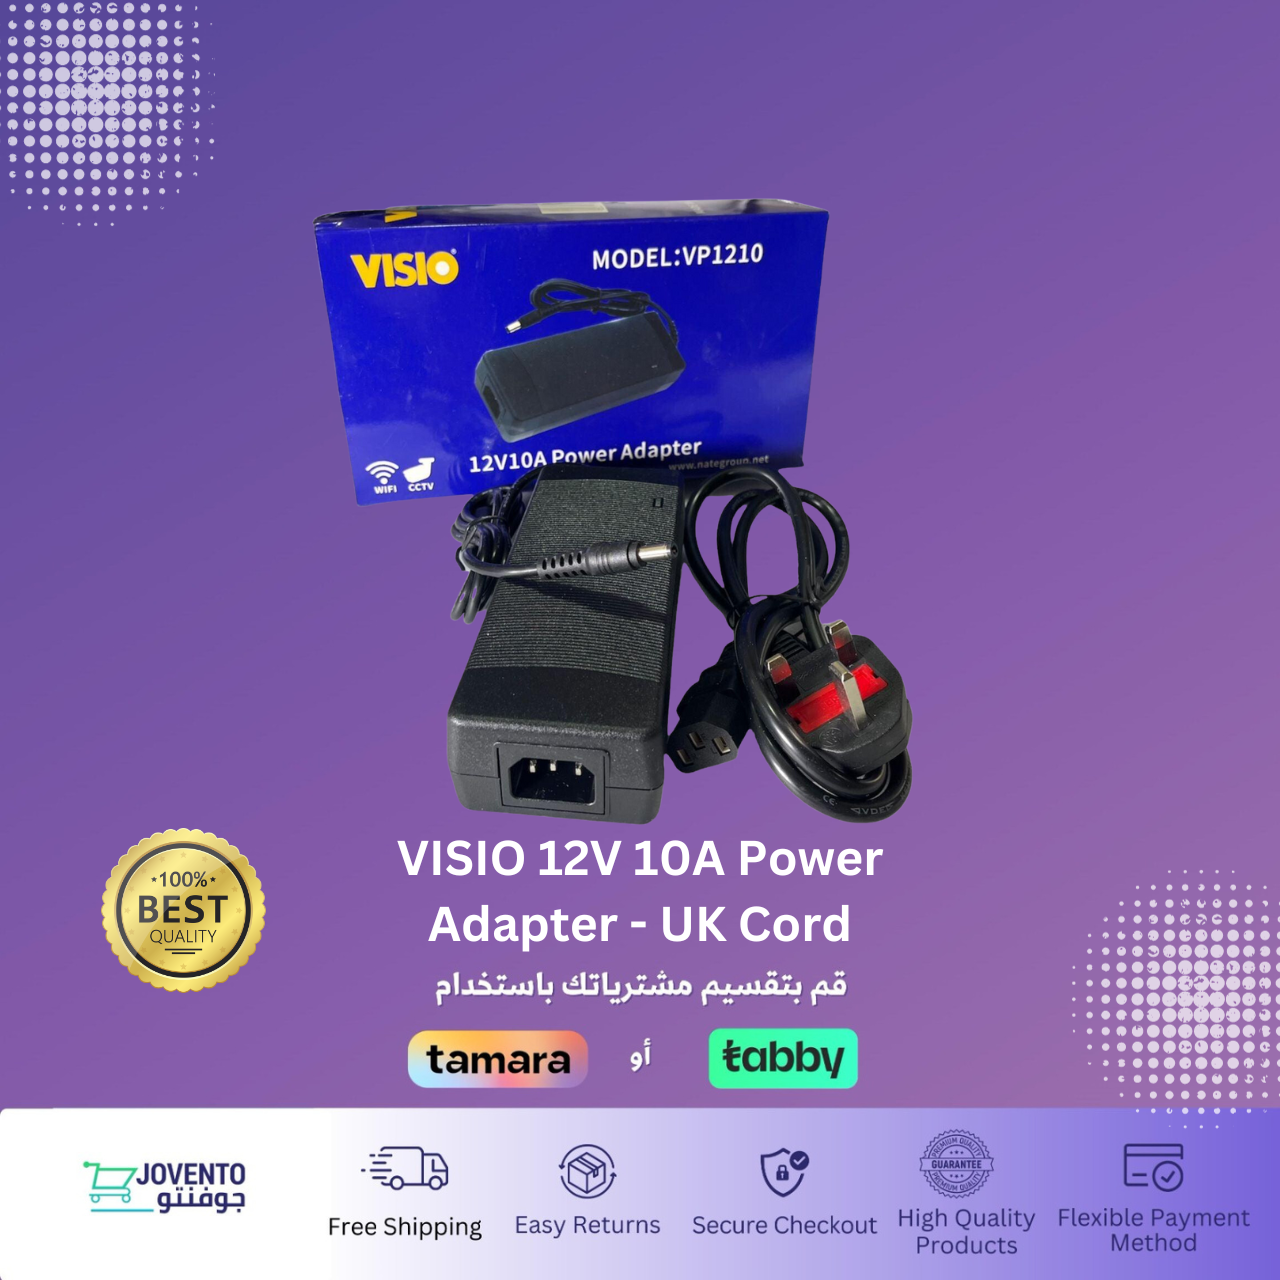 VISIO 12V 10A Power Adapter - UK Cord